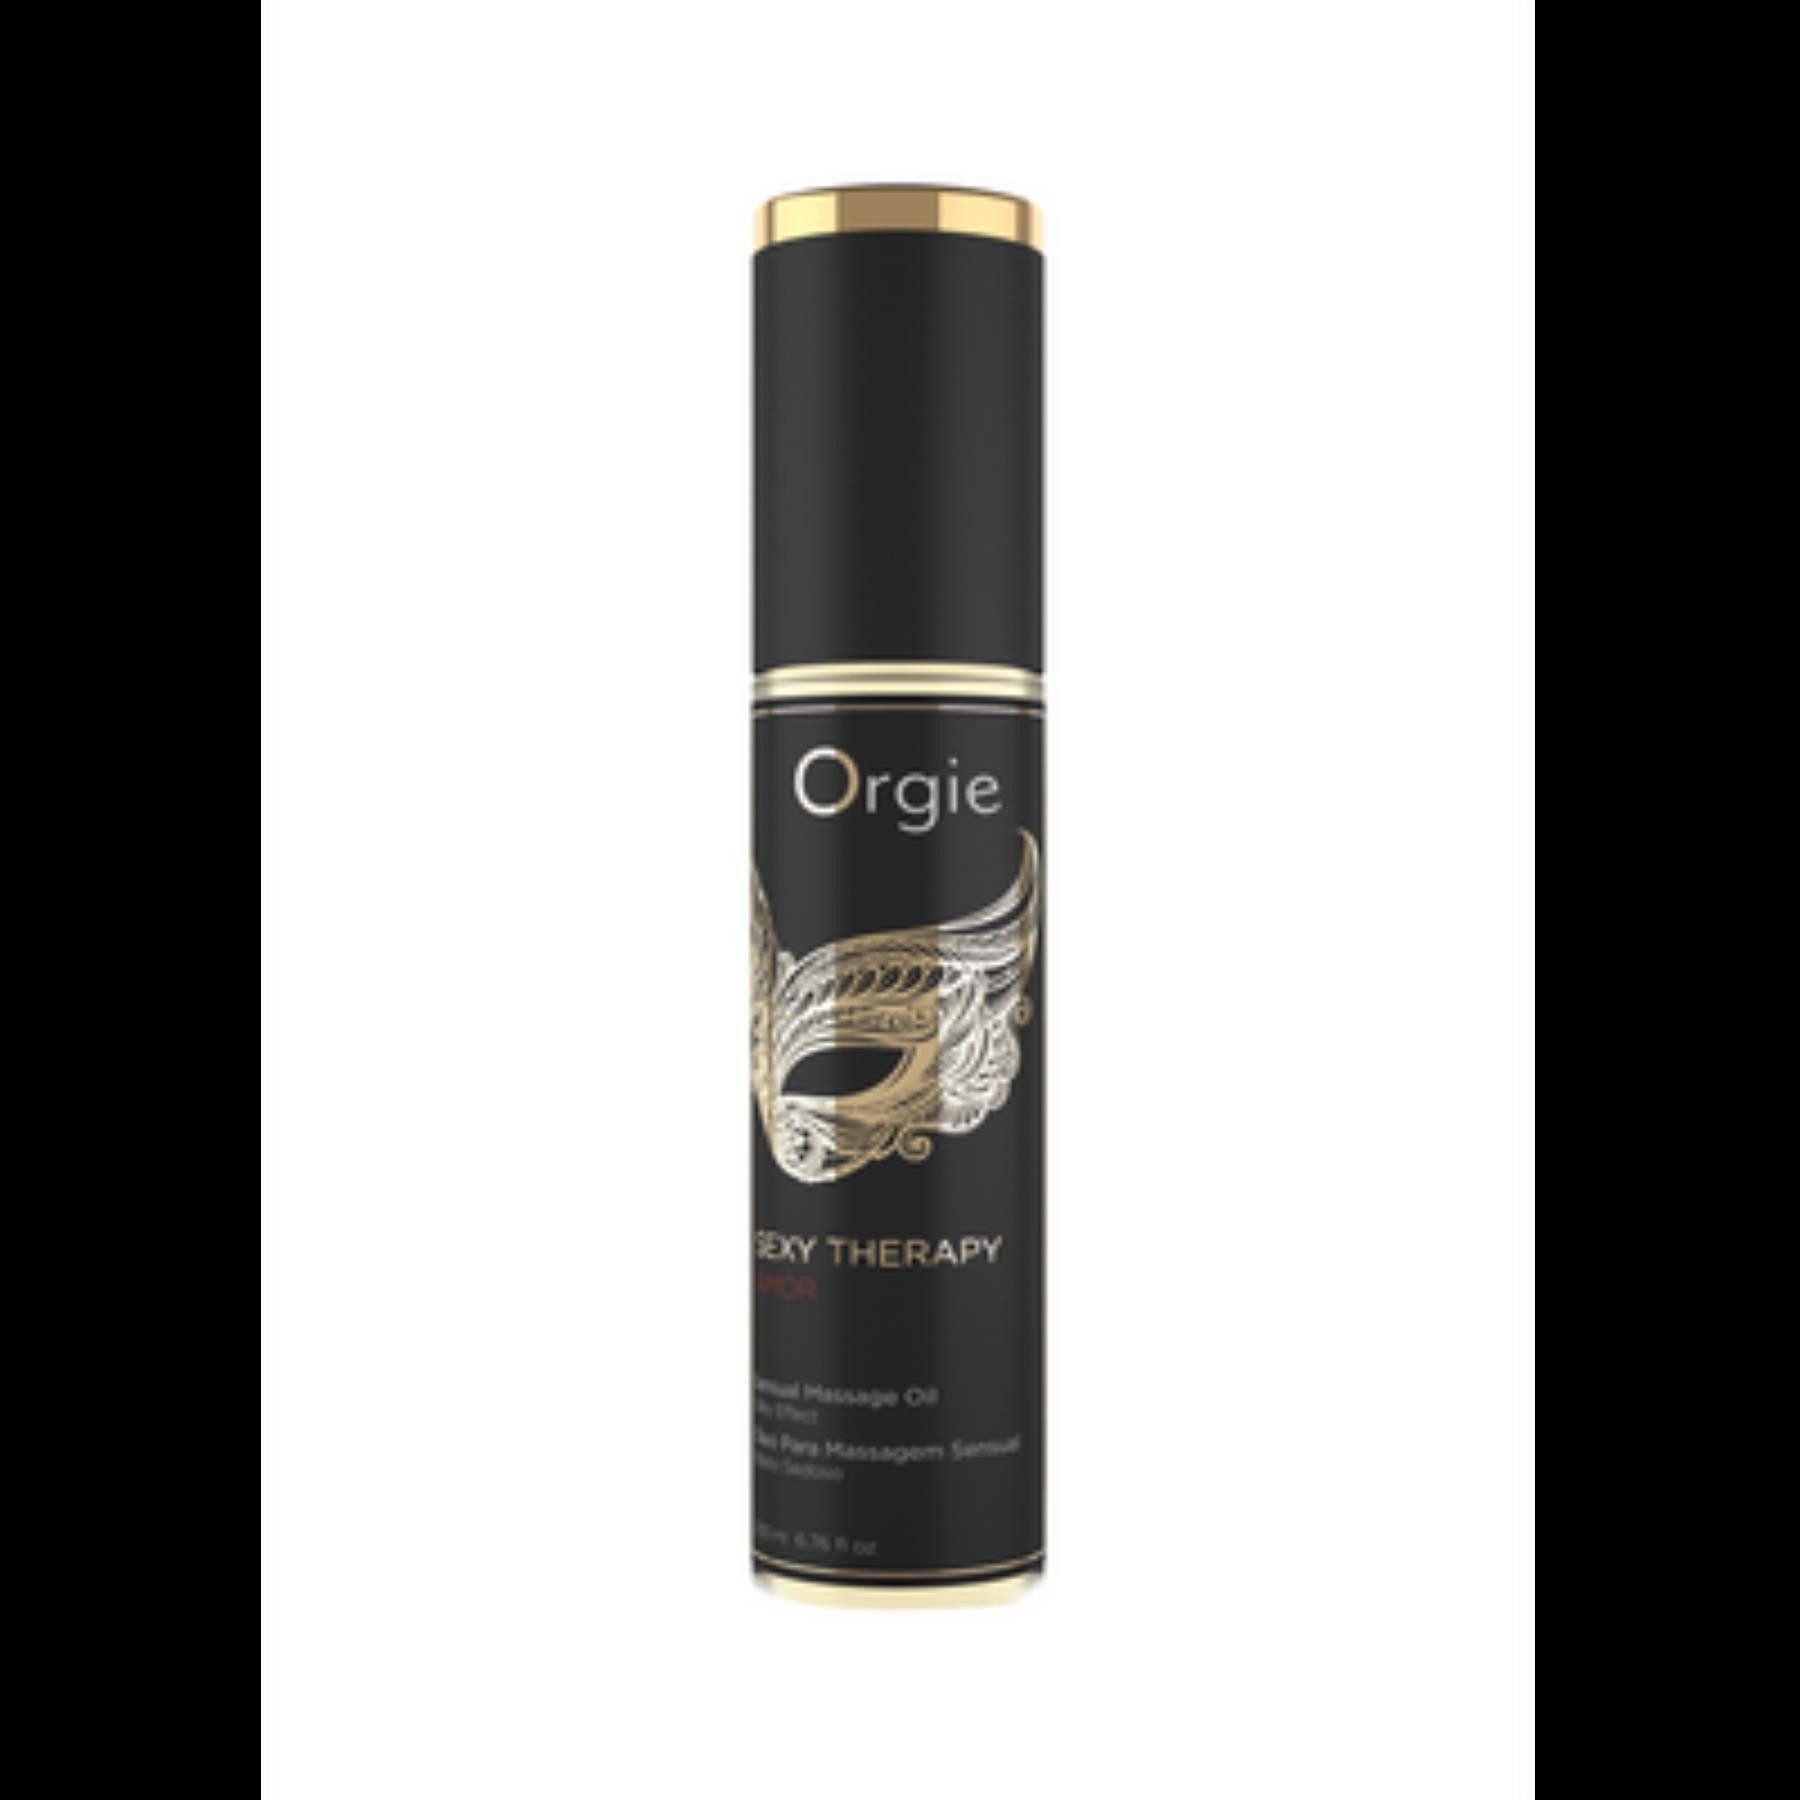 Orgie Gleit- & Massageöl Orgie - 200 ml - Sexy Therapy Amor - Massage Oil - 7 fl oz / 200 ml